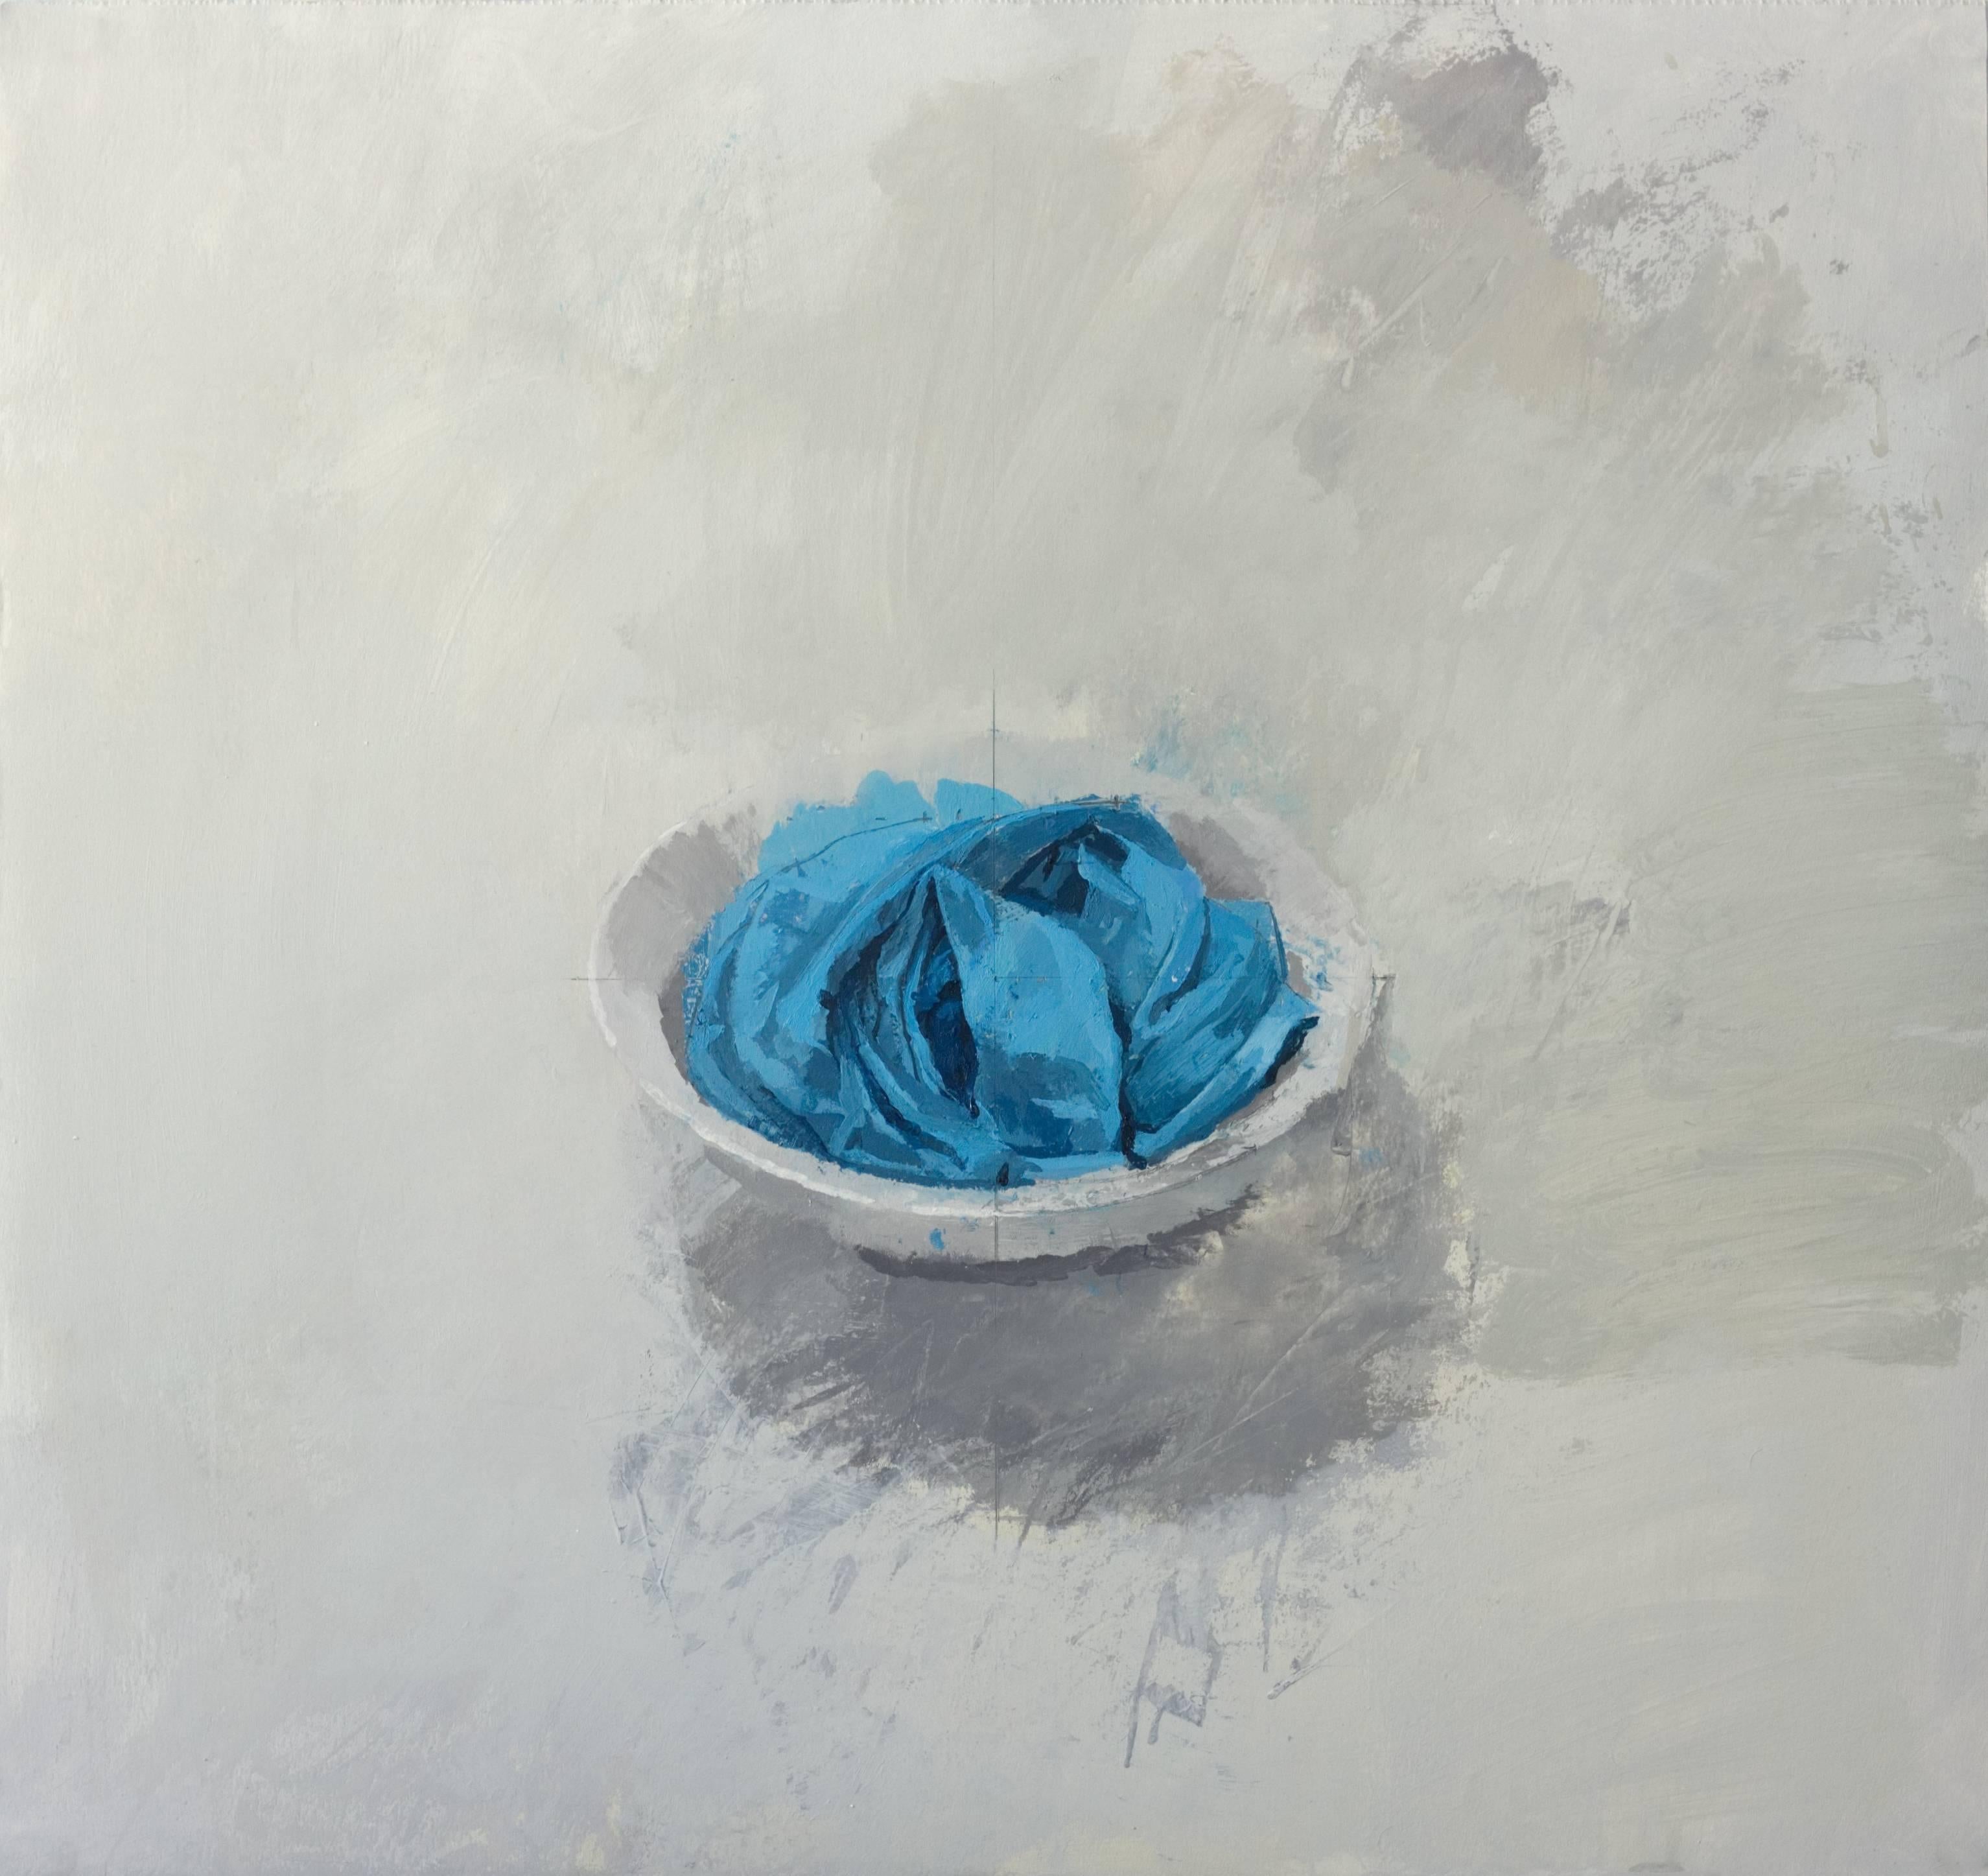 Alberto Romero Still-Life Painting -  Bowl with blue cloth - still life - 21st century Realism Oil on Paper